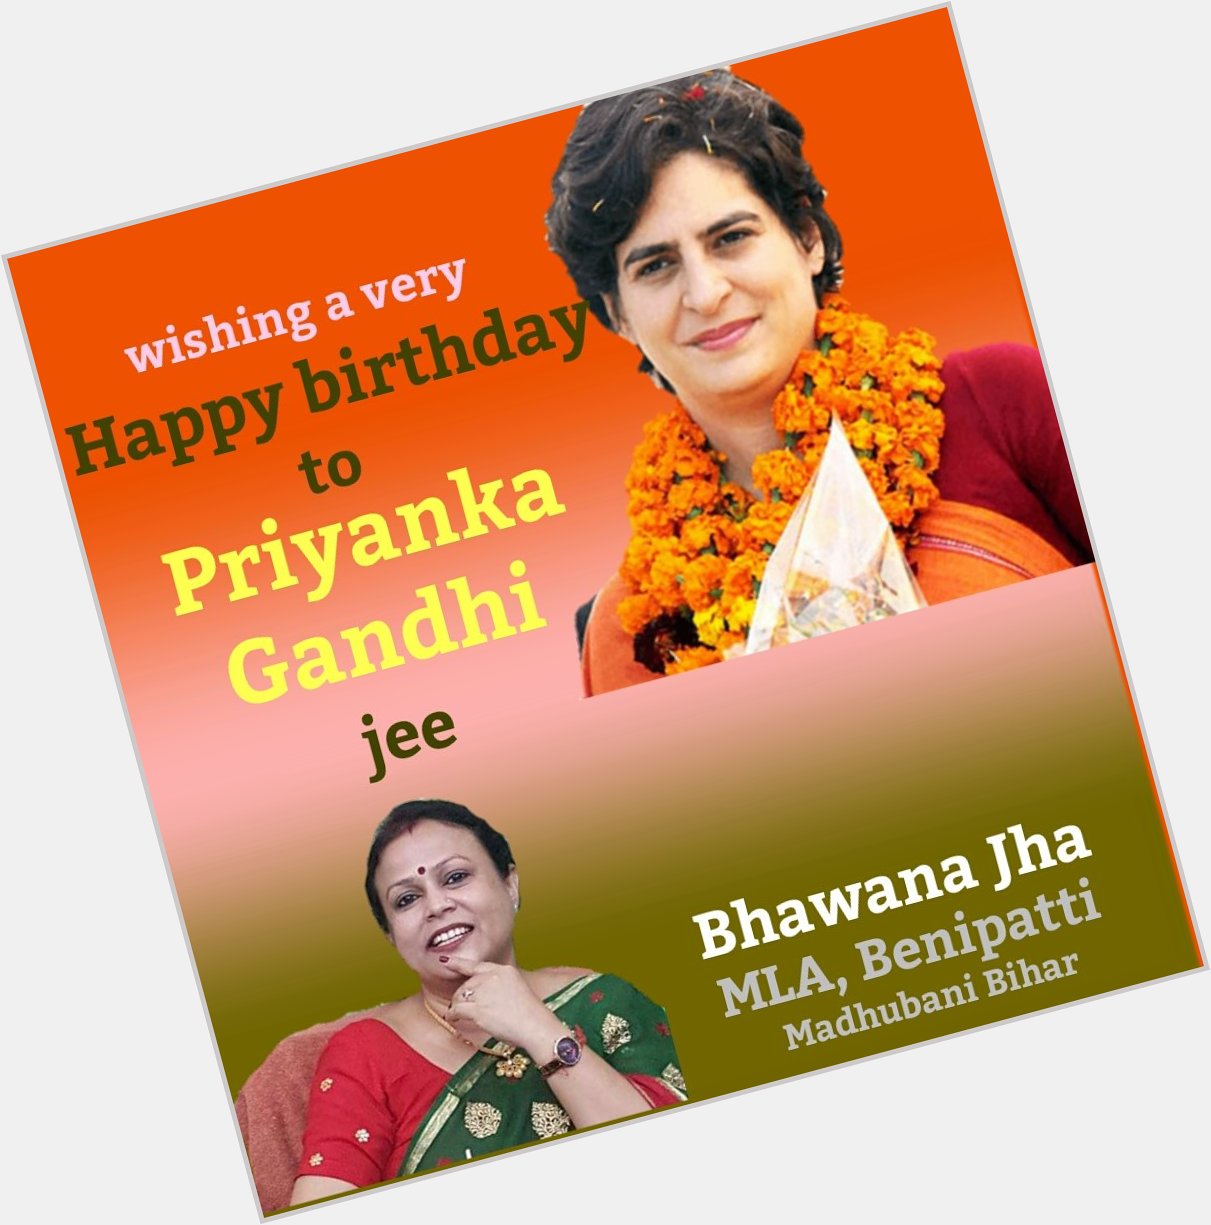 Wishing a very Happy birthday to Priyanka Gandhi jee 